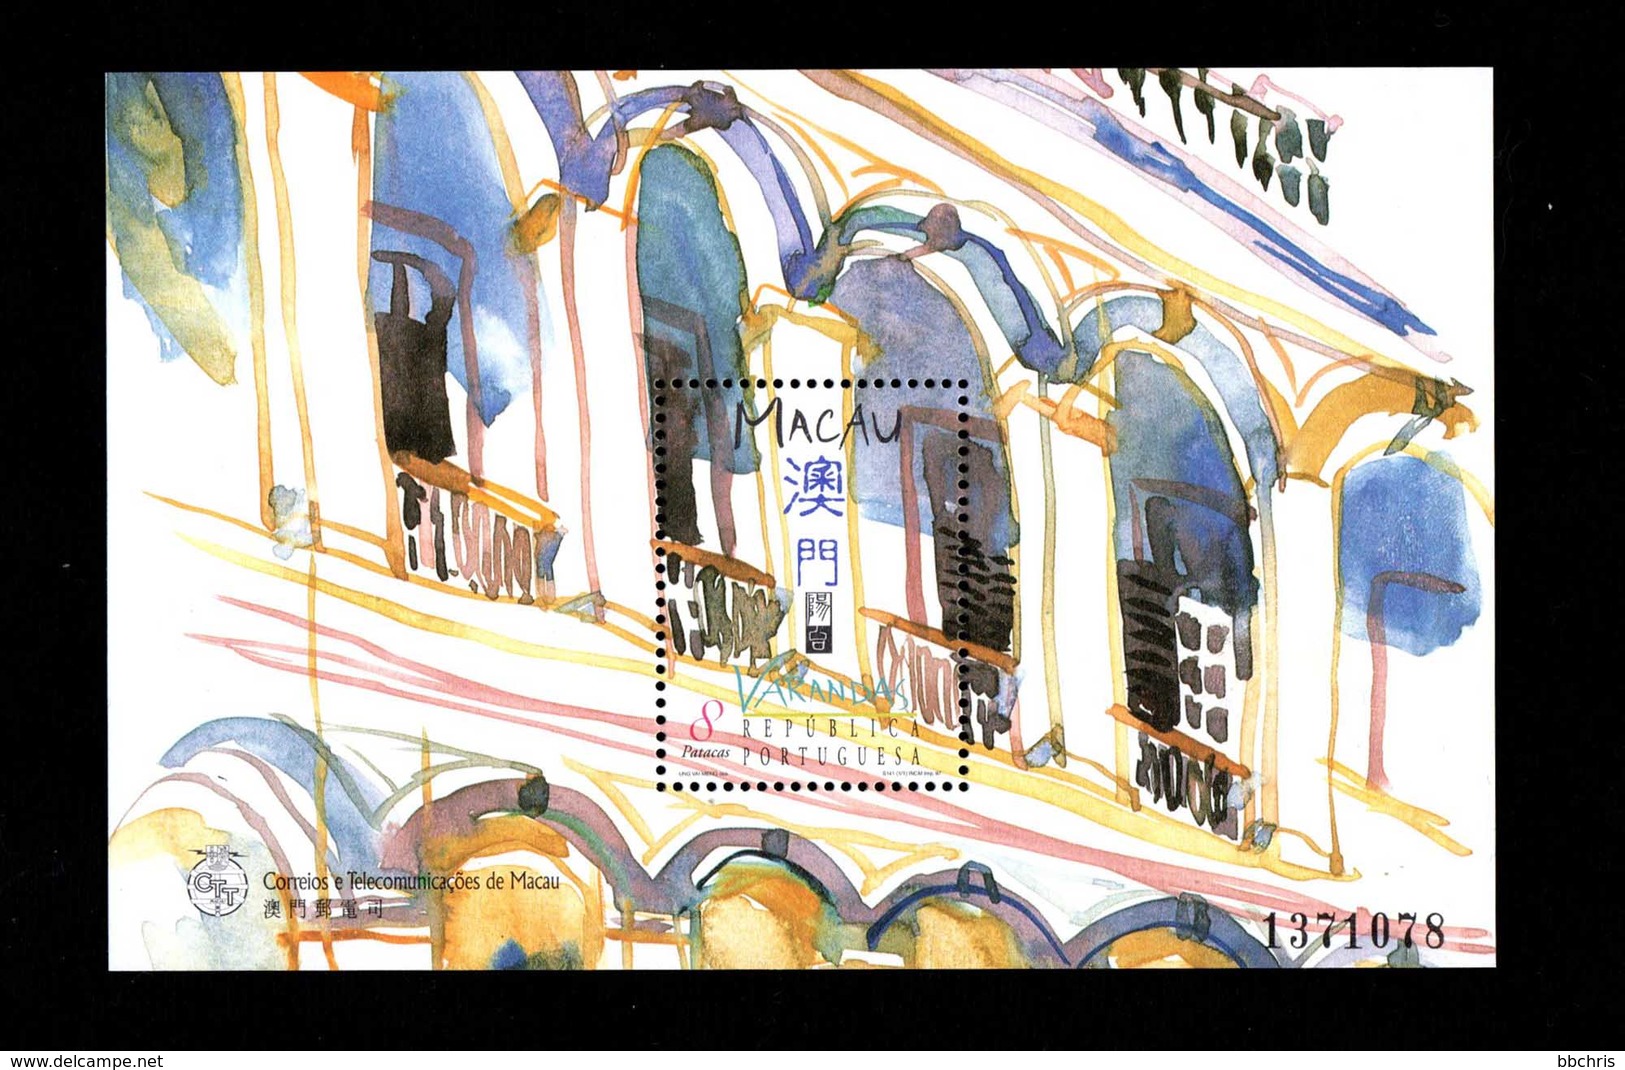 Macau Macao 1997 Varandas Balconies Painting Souvenir Sheet MNH Mint - Carnets